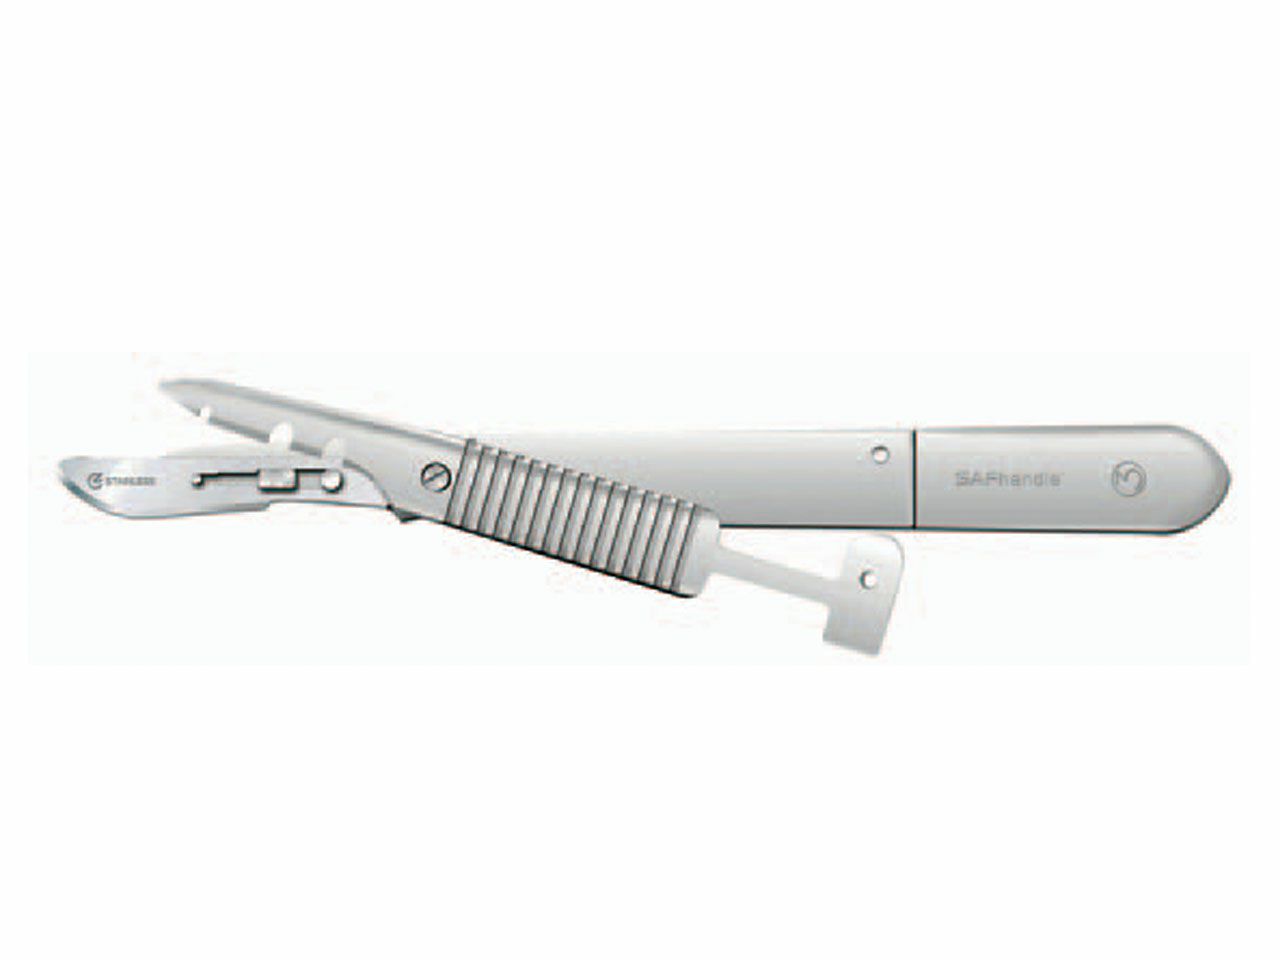 safety-scalpel-handle-n-3-for-blades-10-15-26915_1.jpg